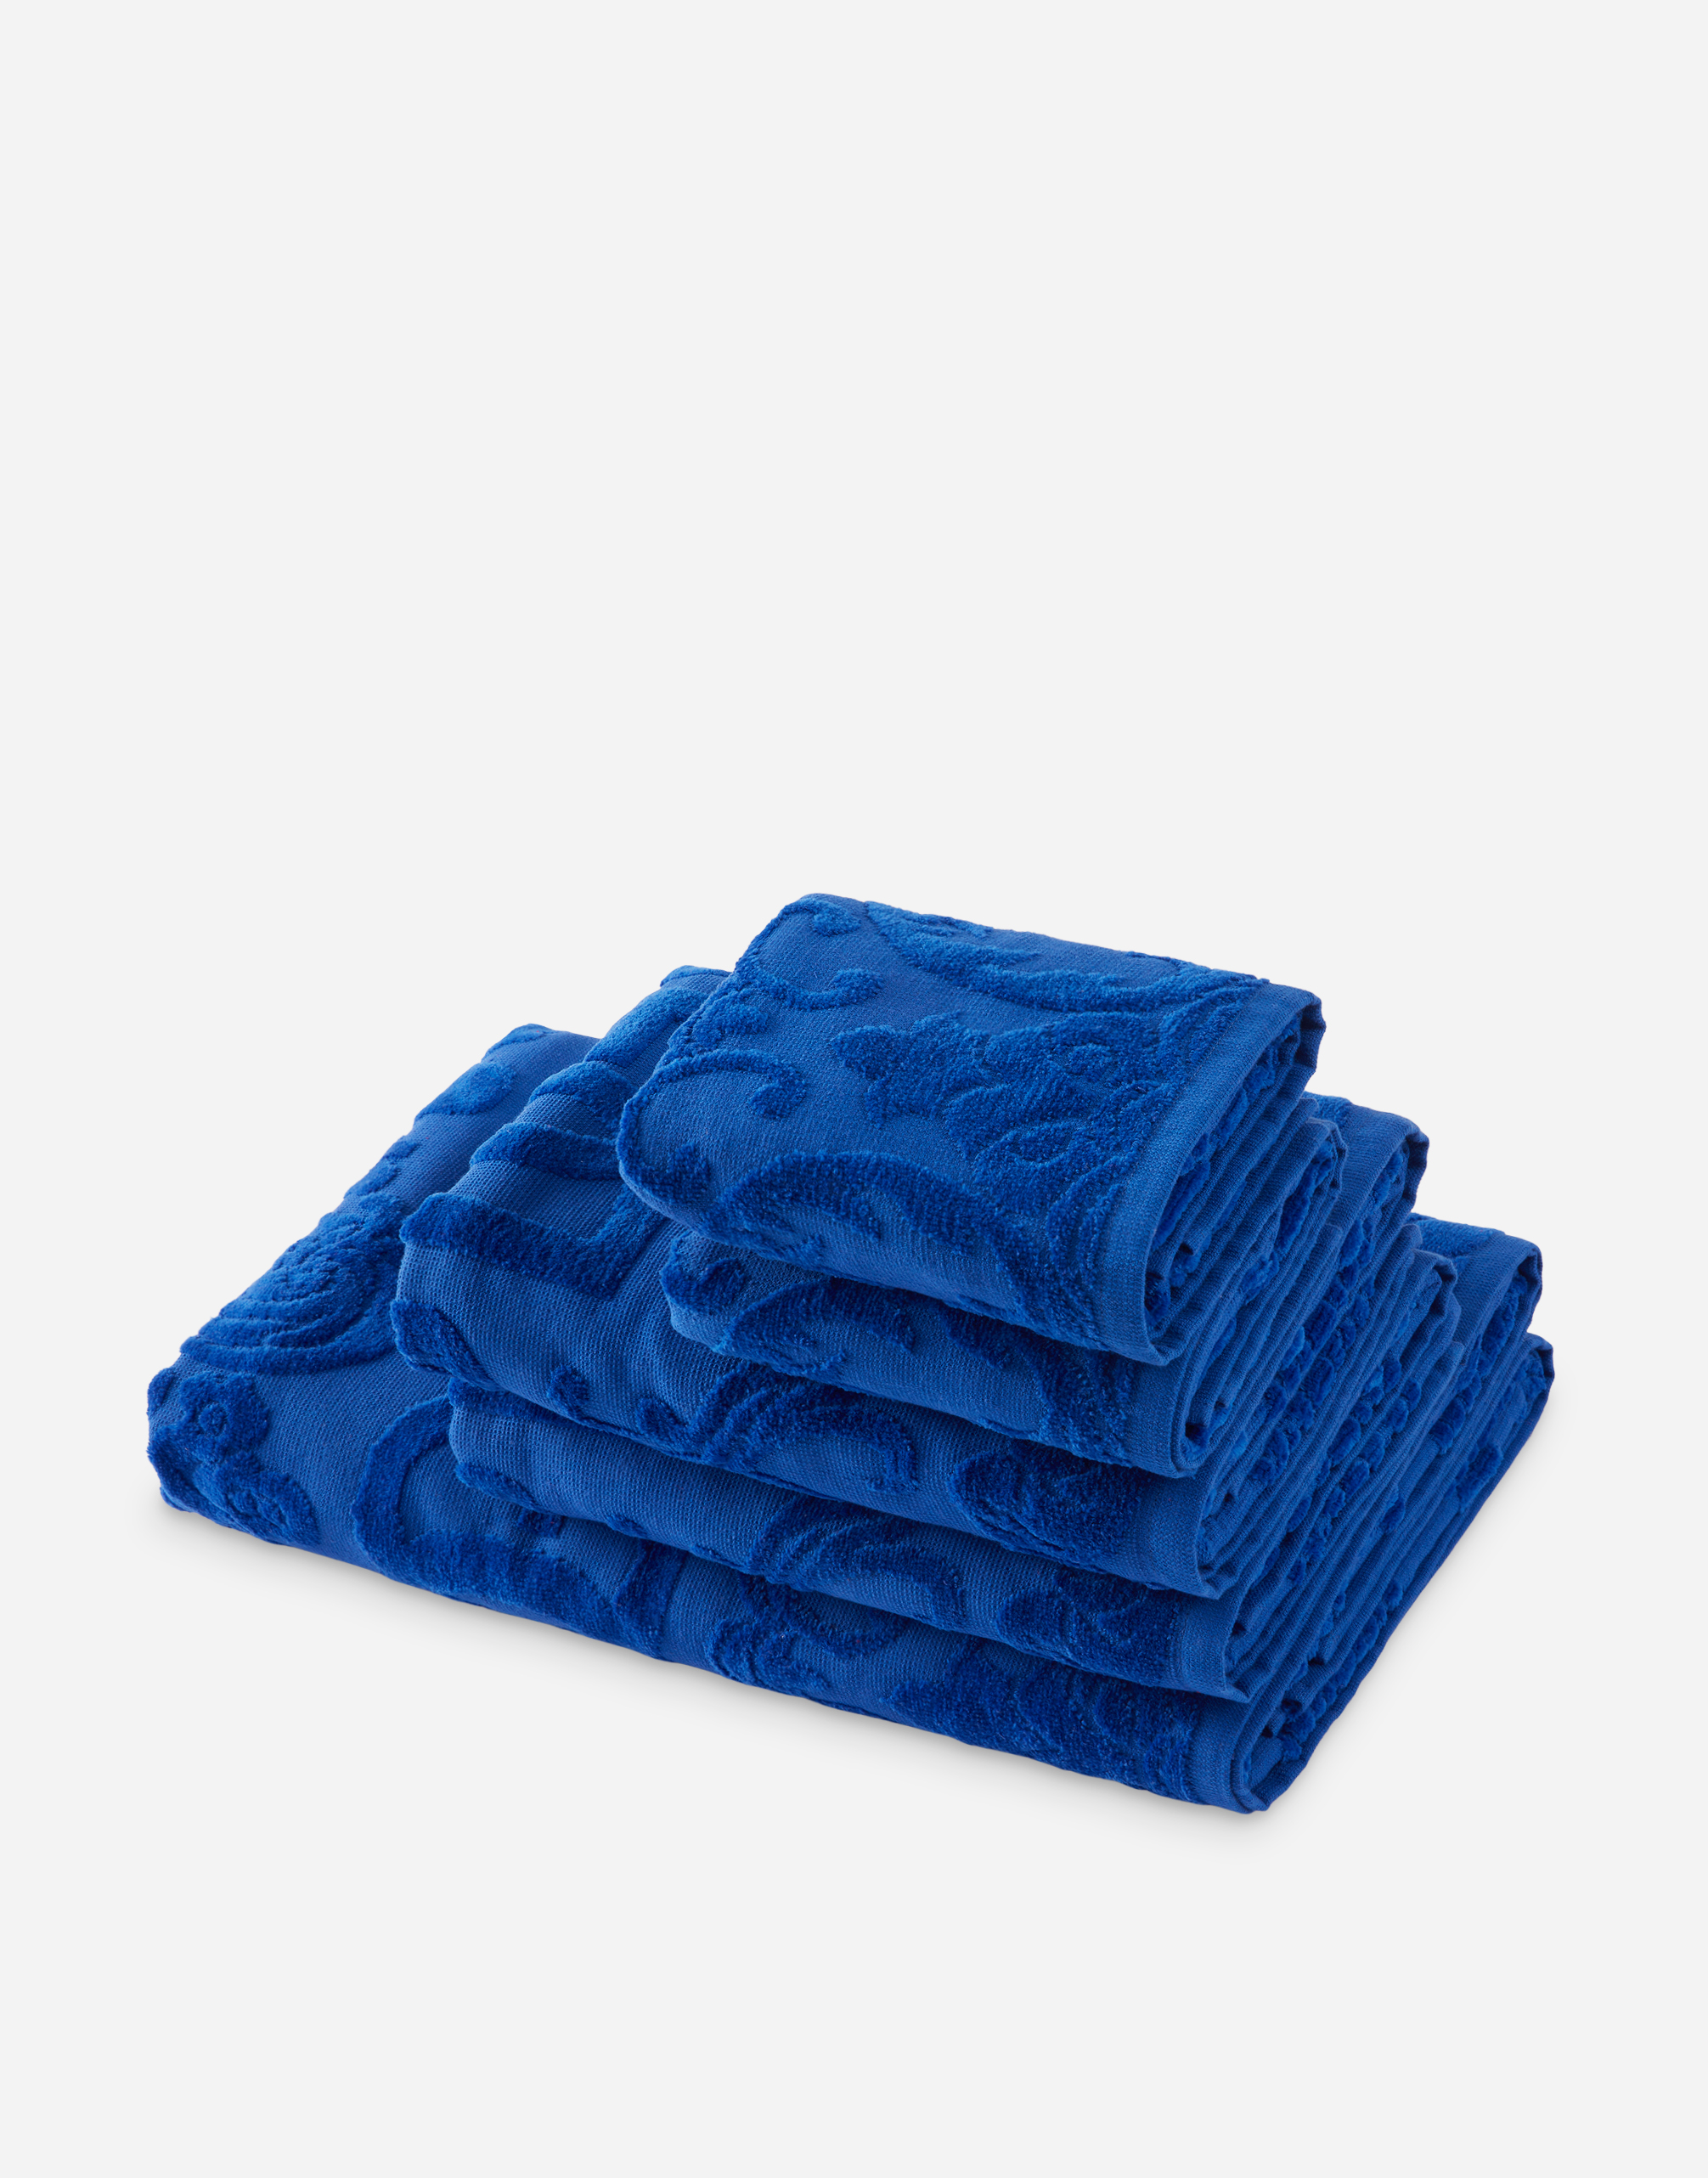 Set 5 Cotton Towels in Multicolor